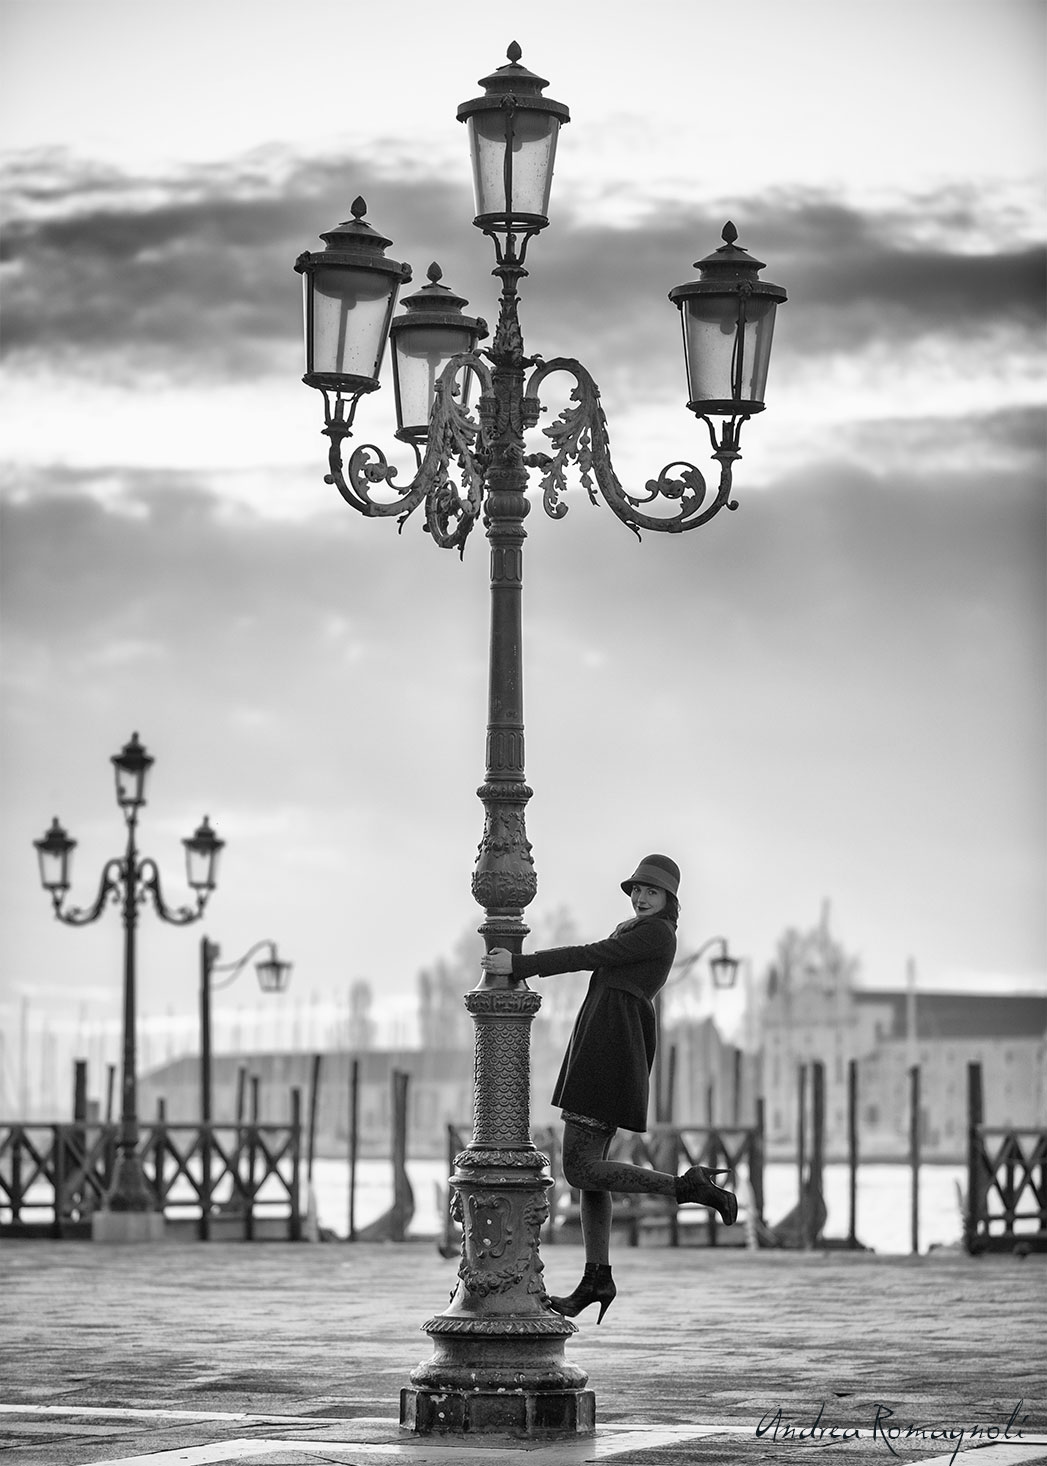 Streetlights in Venice...